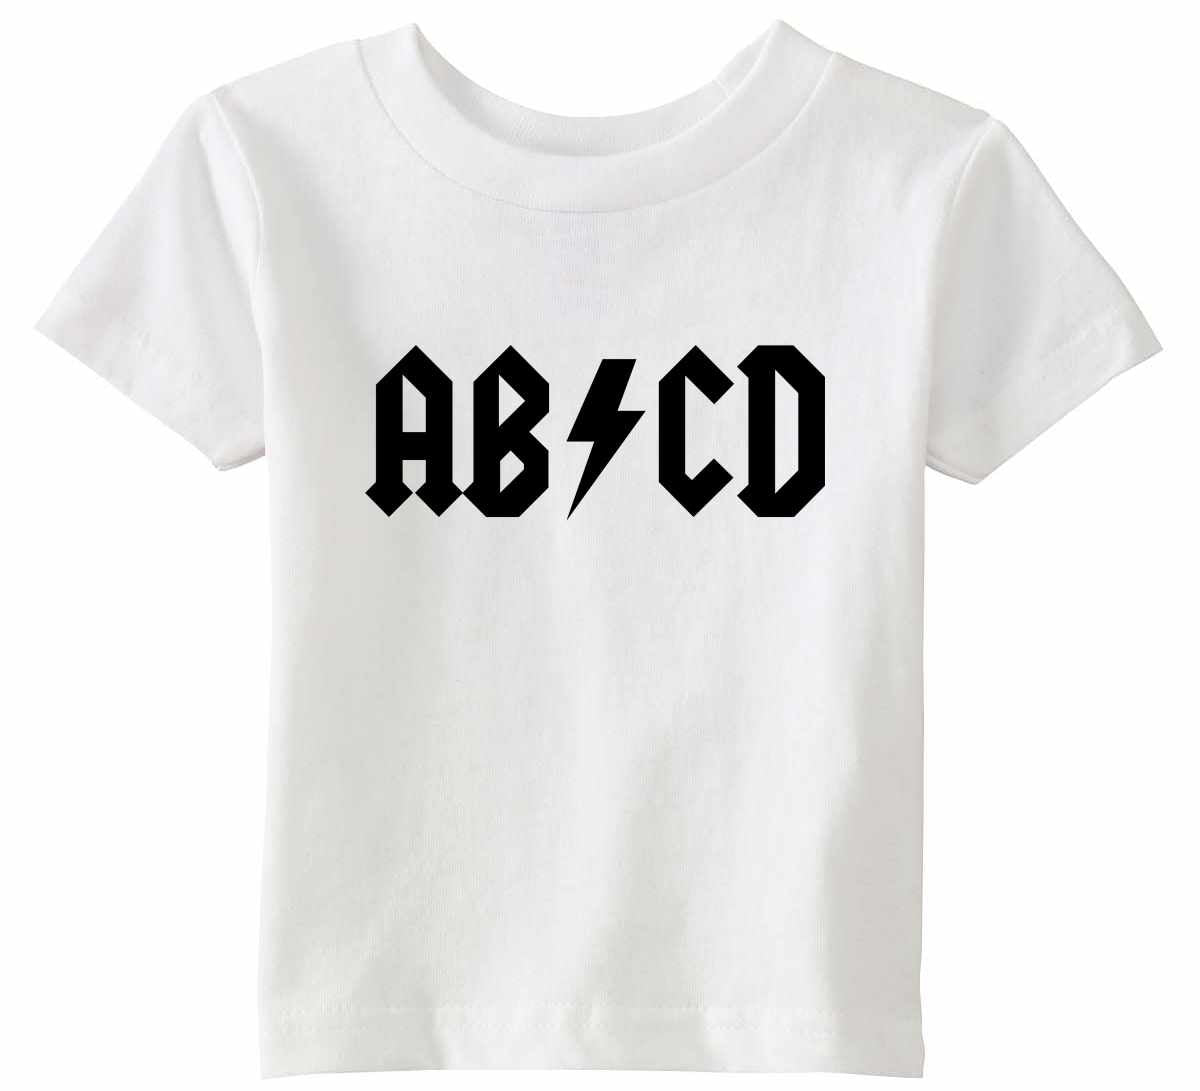 ABCD Infant/Toddler  (#974-7)